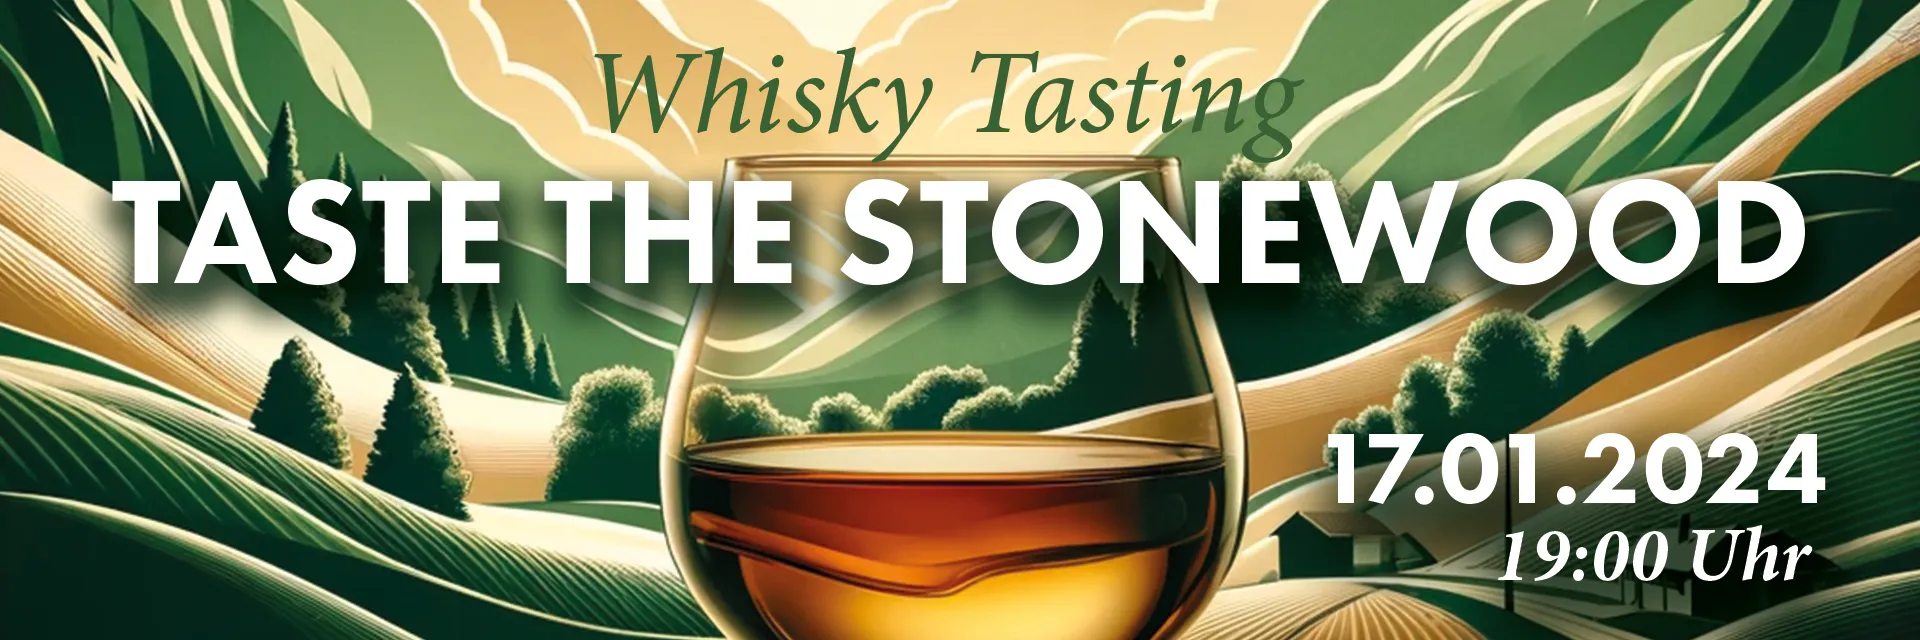 WhiskyTasting240117.png